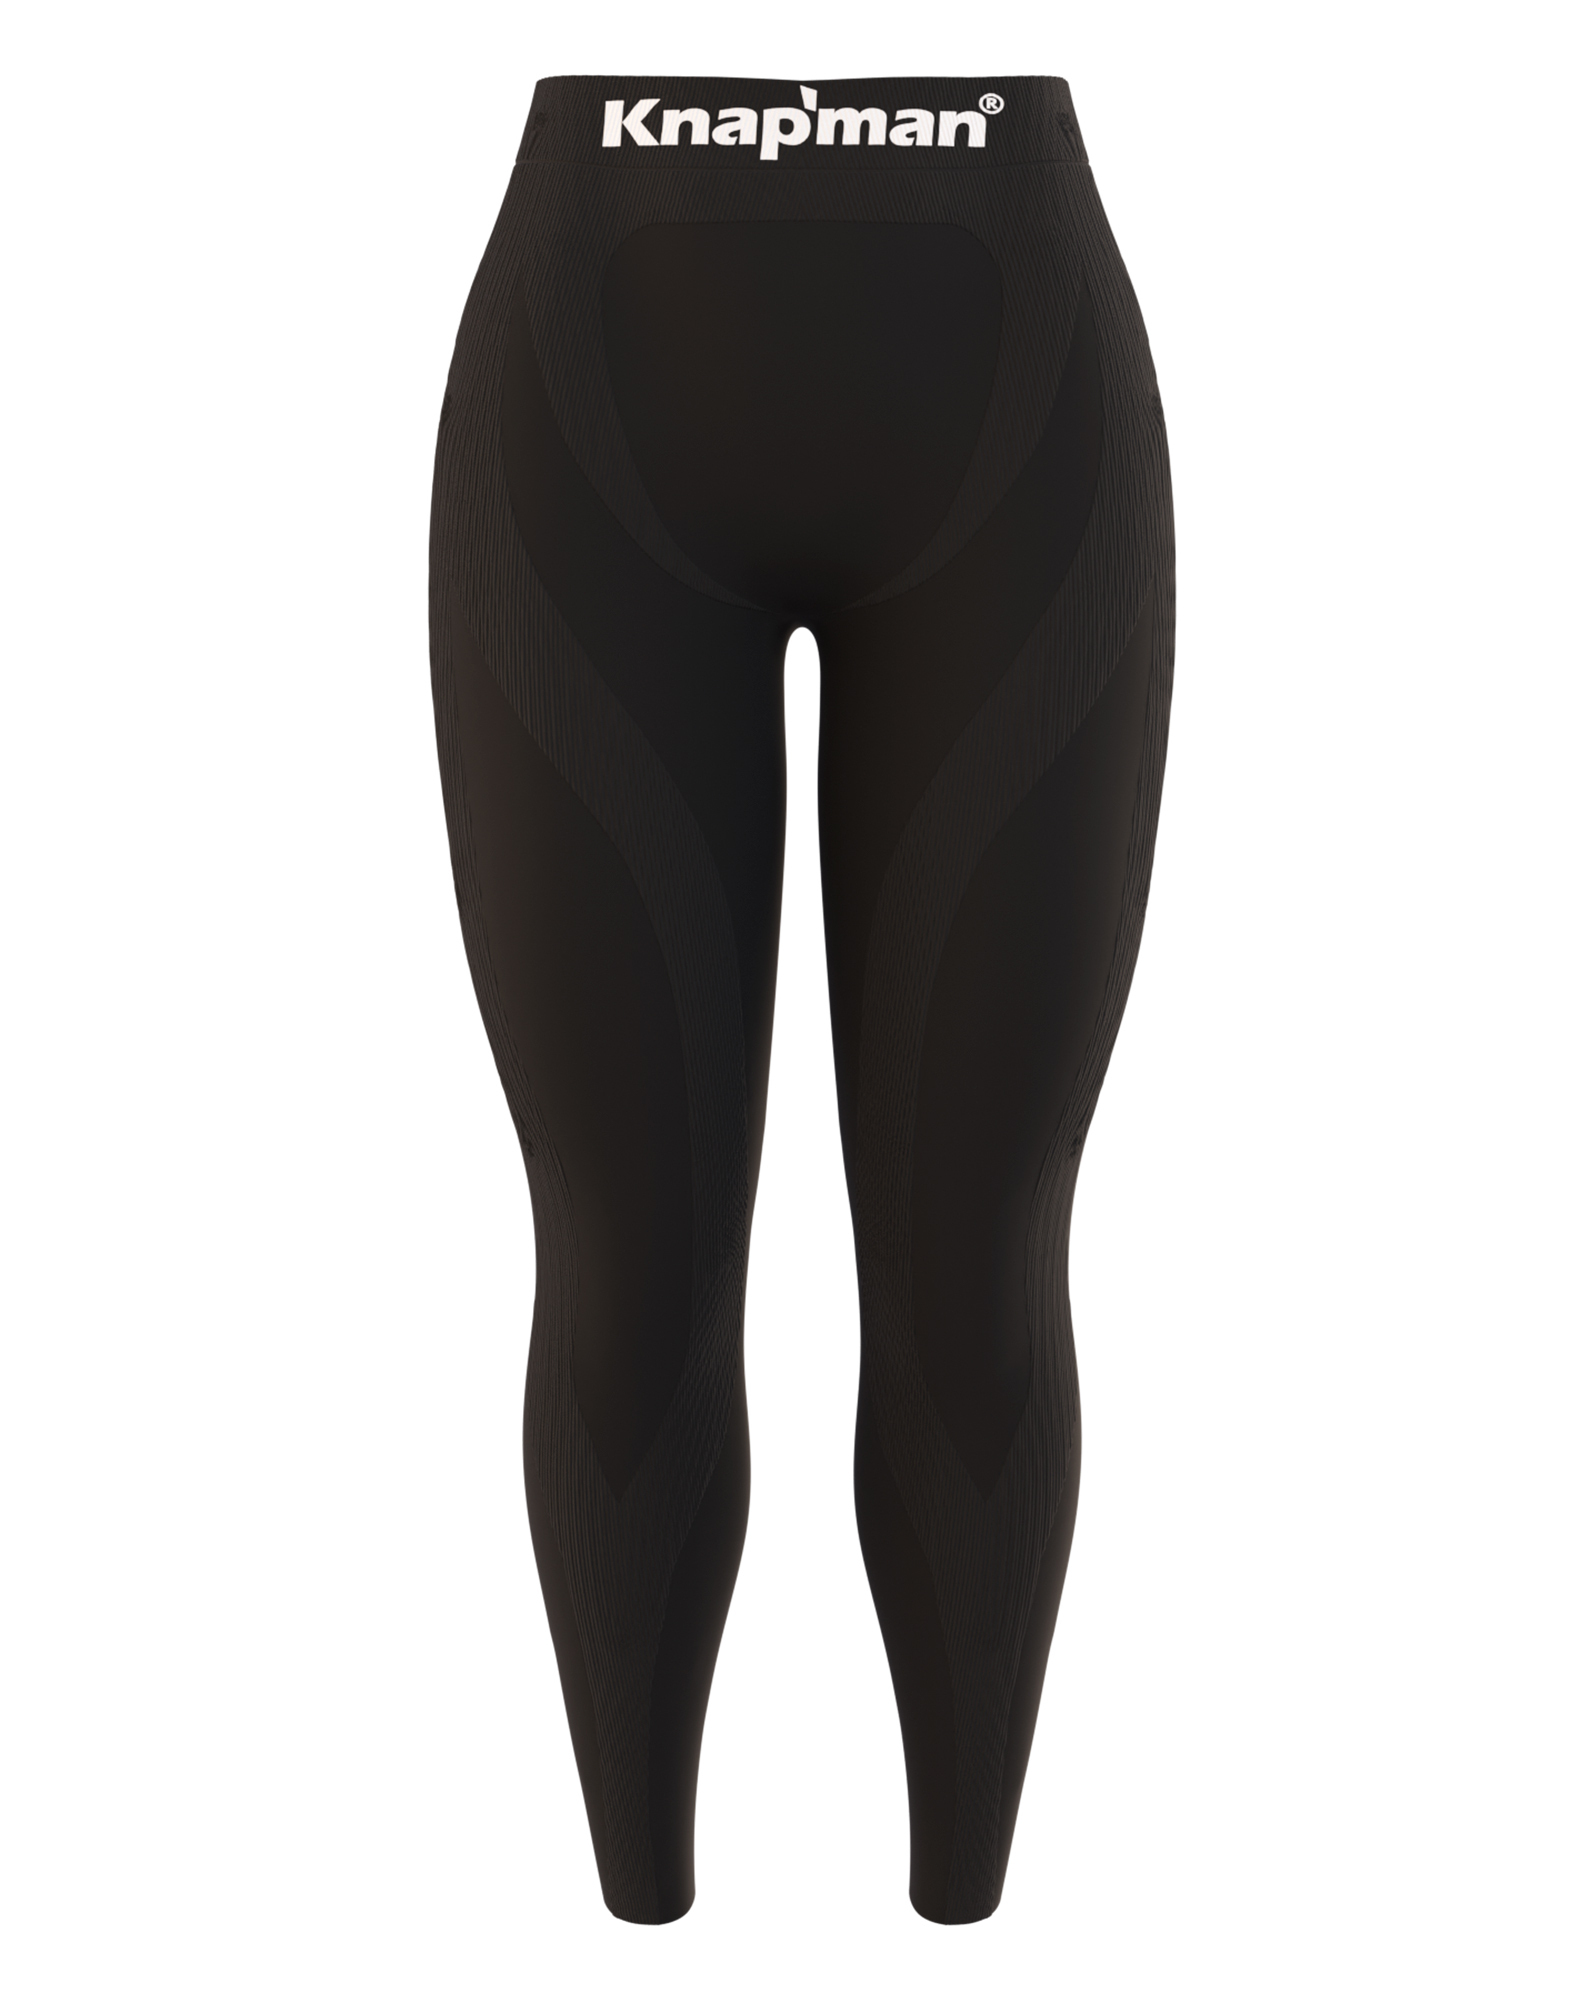 https://www.knapman.co.uk/product/386-large-knapman-fitform-compression-sports-legging--black.jpg